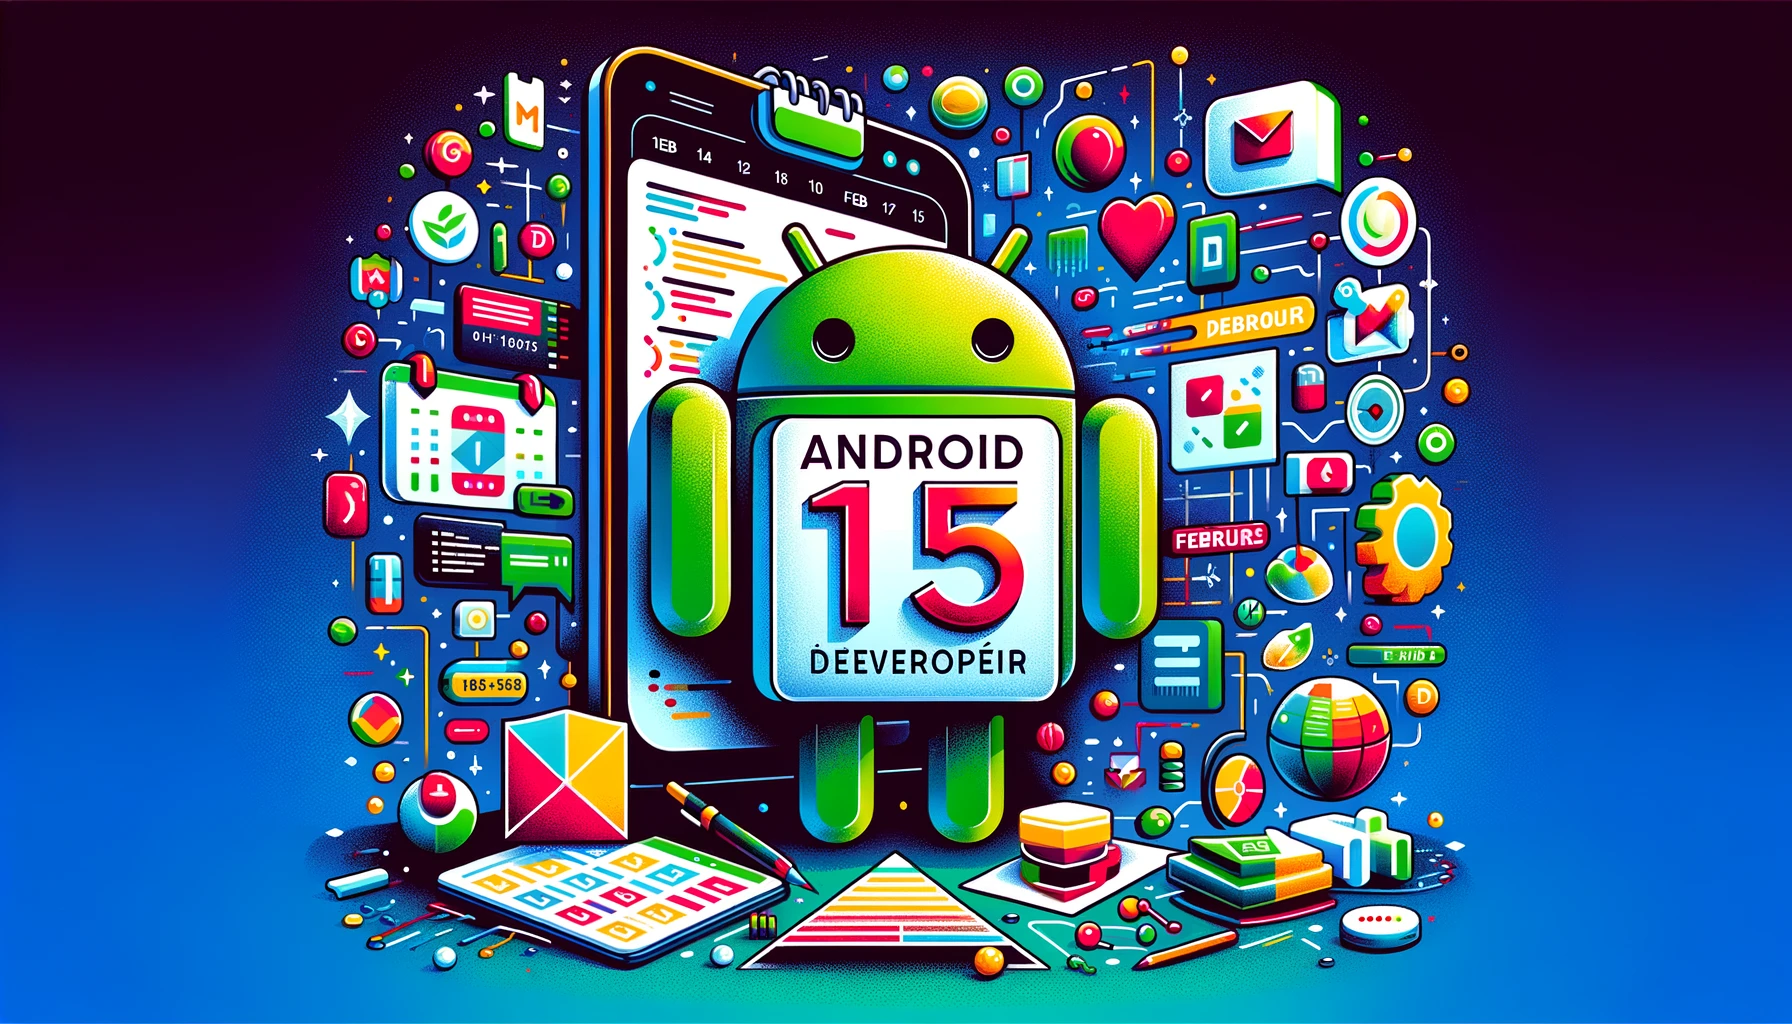 La vista previa para desarrolladores de Android 15 se espera para el 15 de febrero